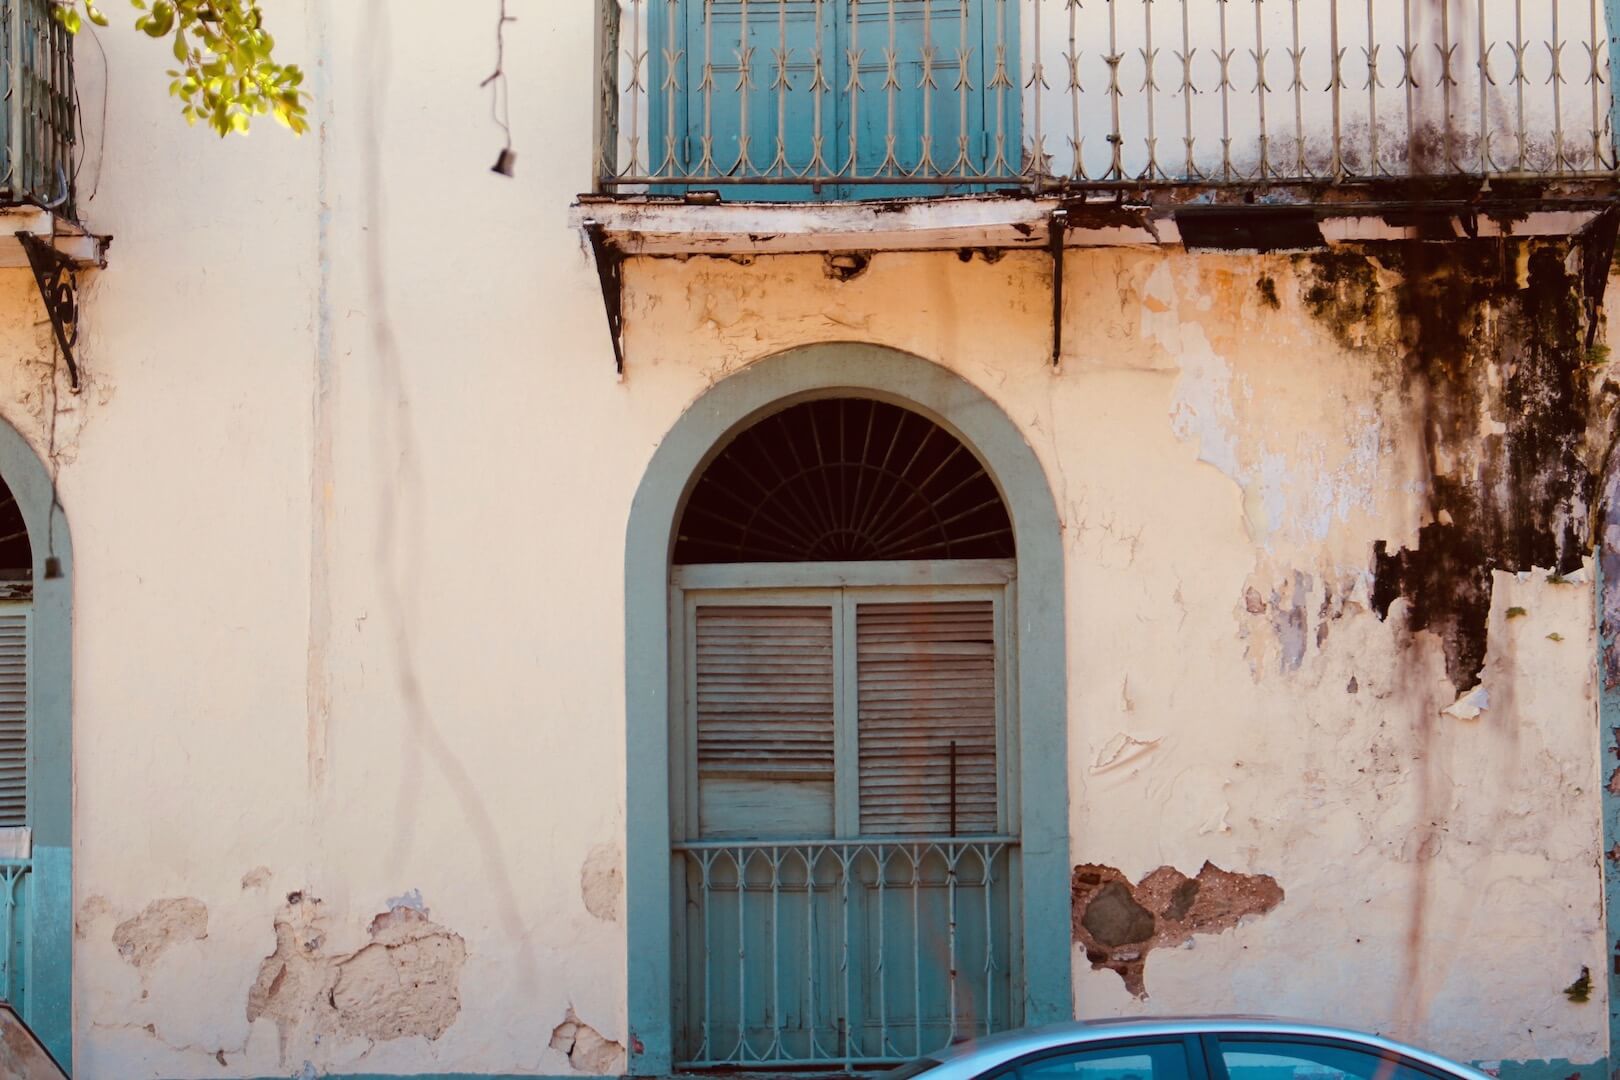 The Noriega Tapes Chapter 49 - Casco Viejo - Doorway in Plaza De La Independencia